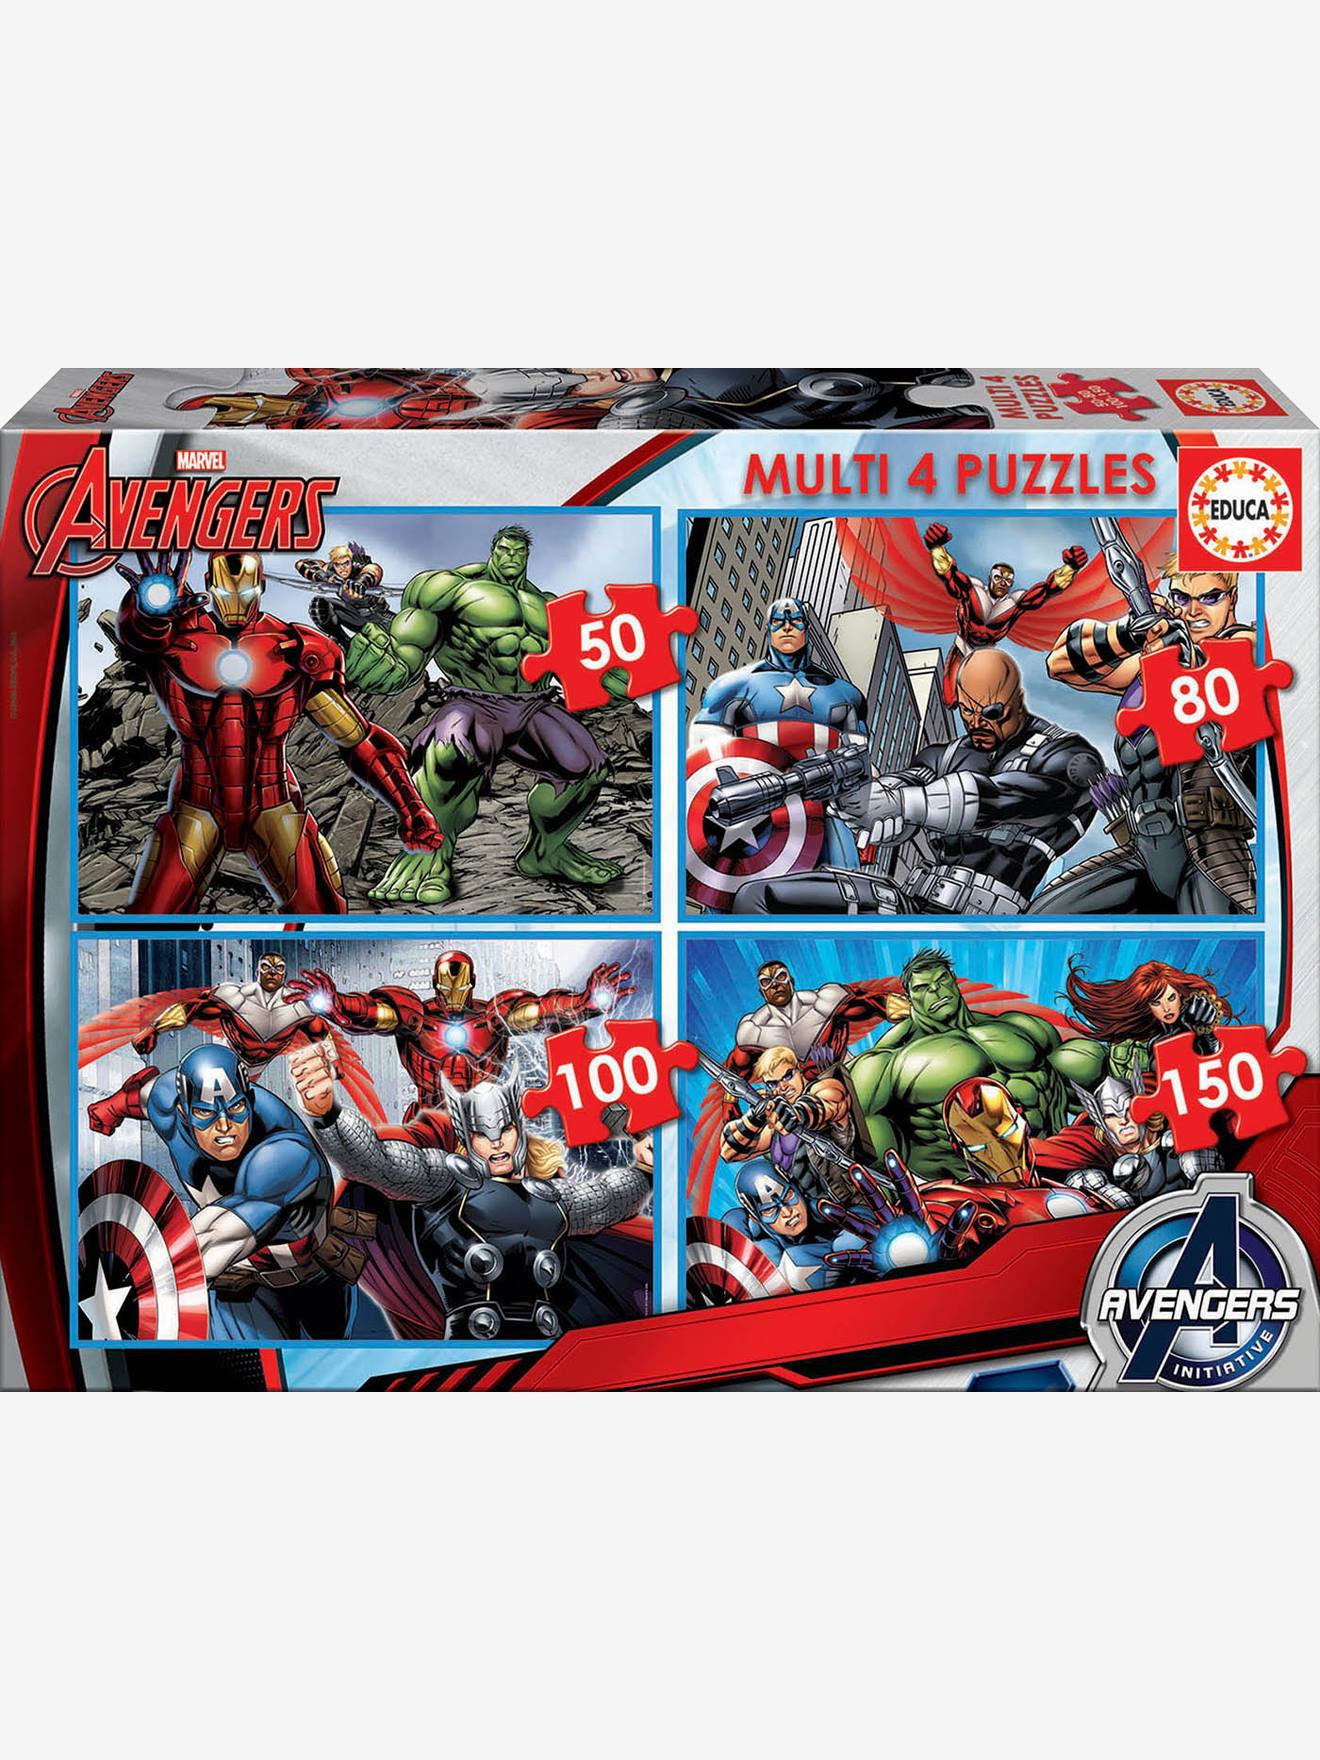 Progressive Puzzles, 50-150 Pieces, Multi 4 Marvel(r) The Avengers, by EDUCA dark red